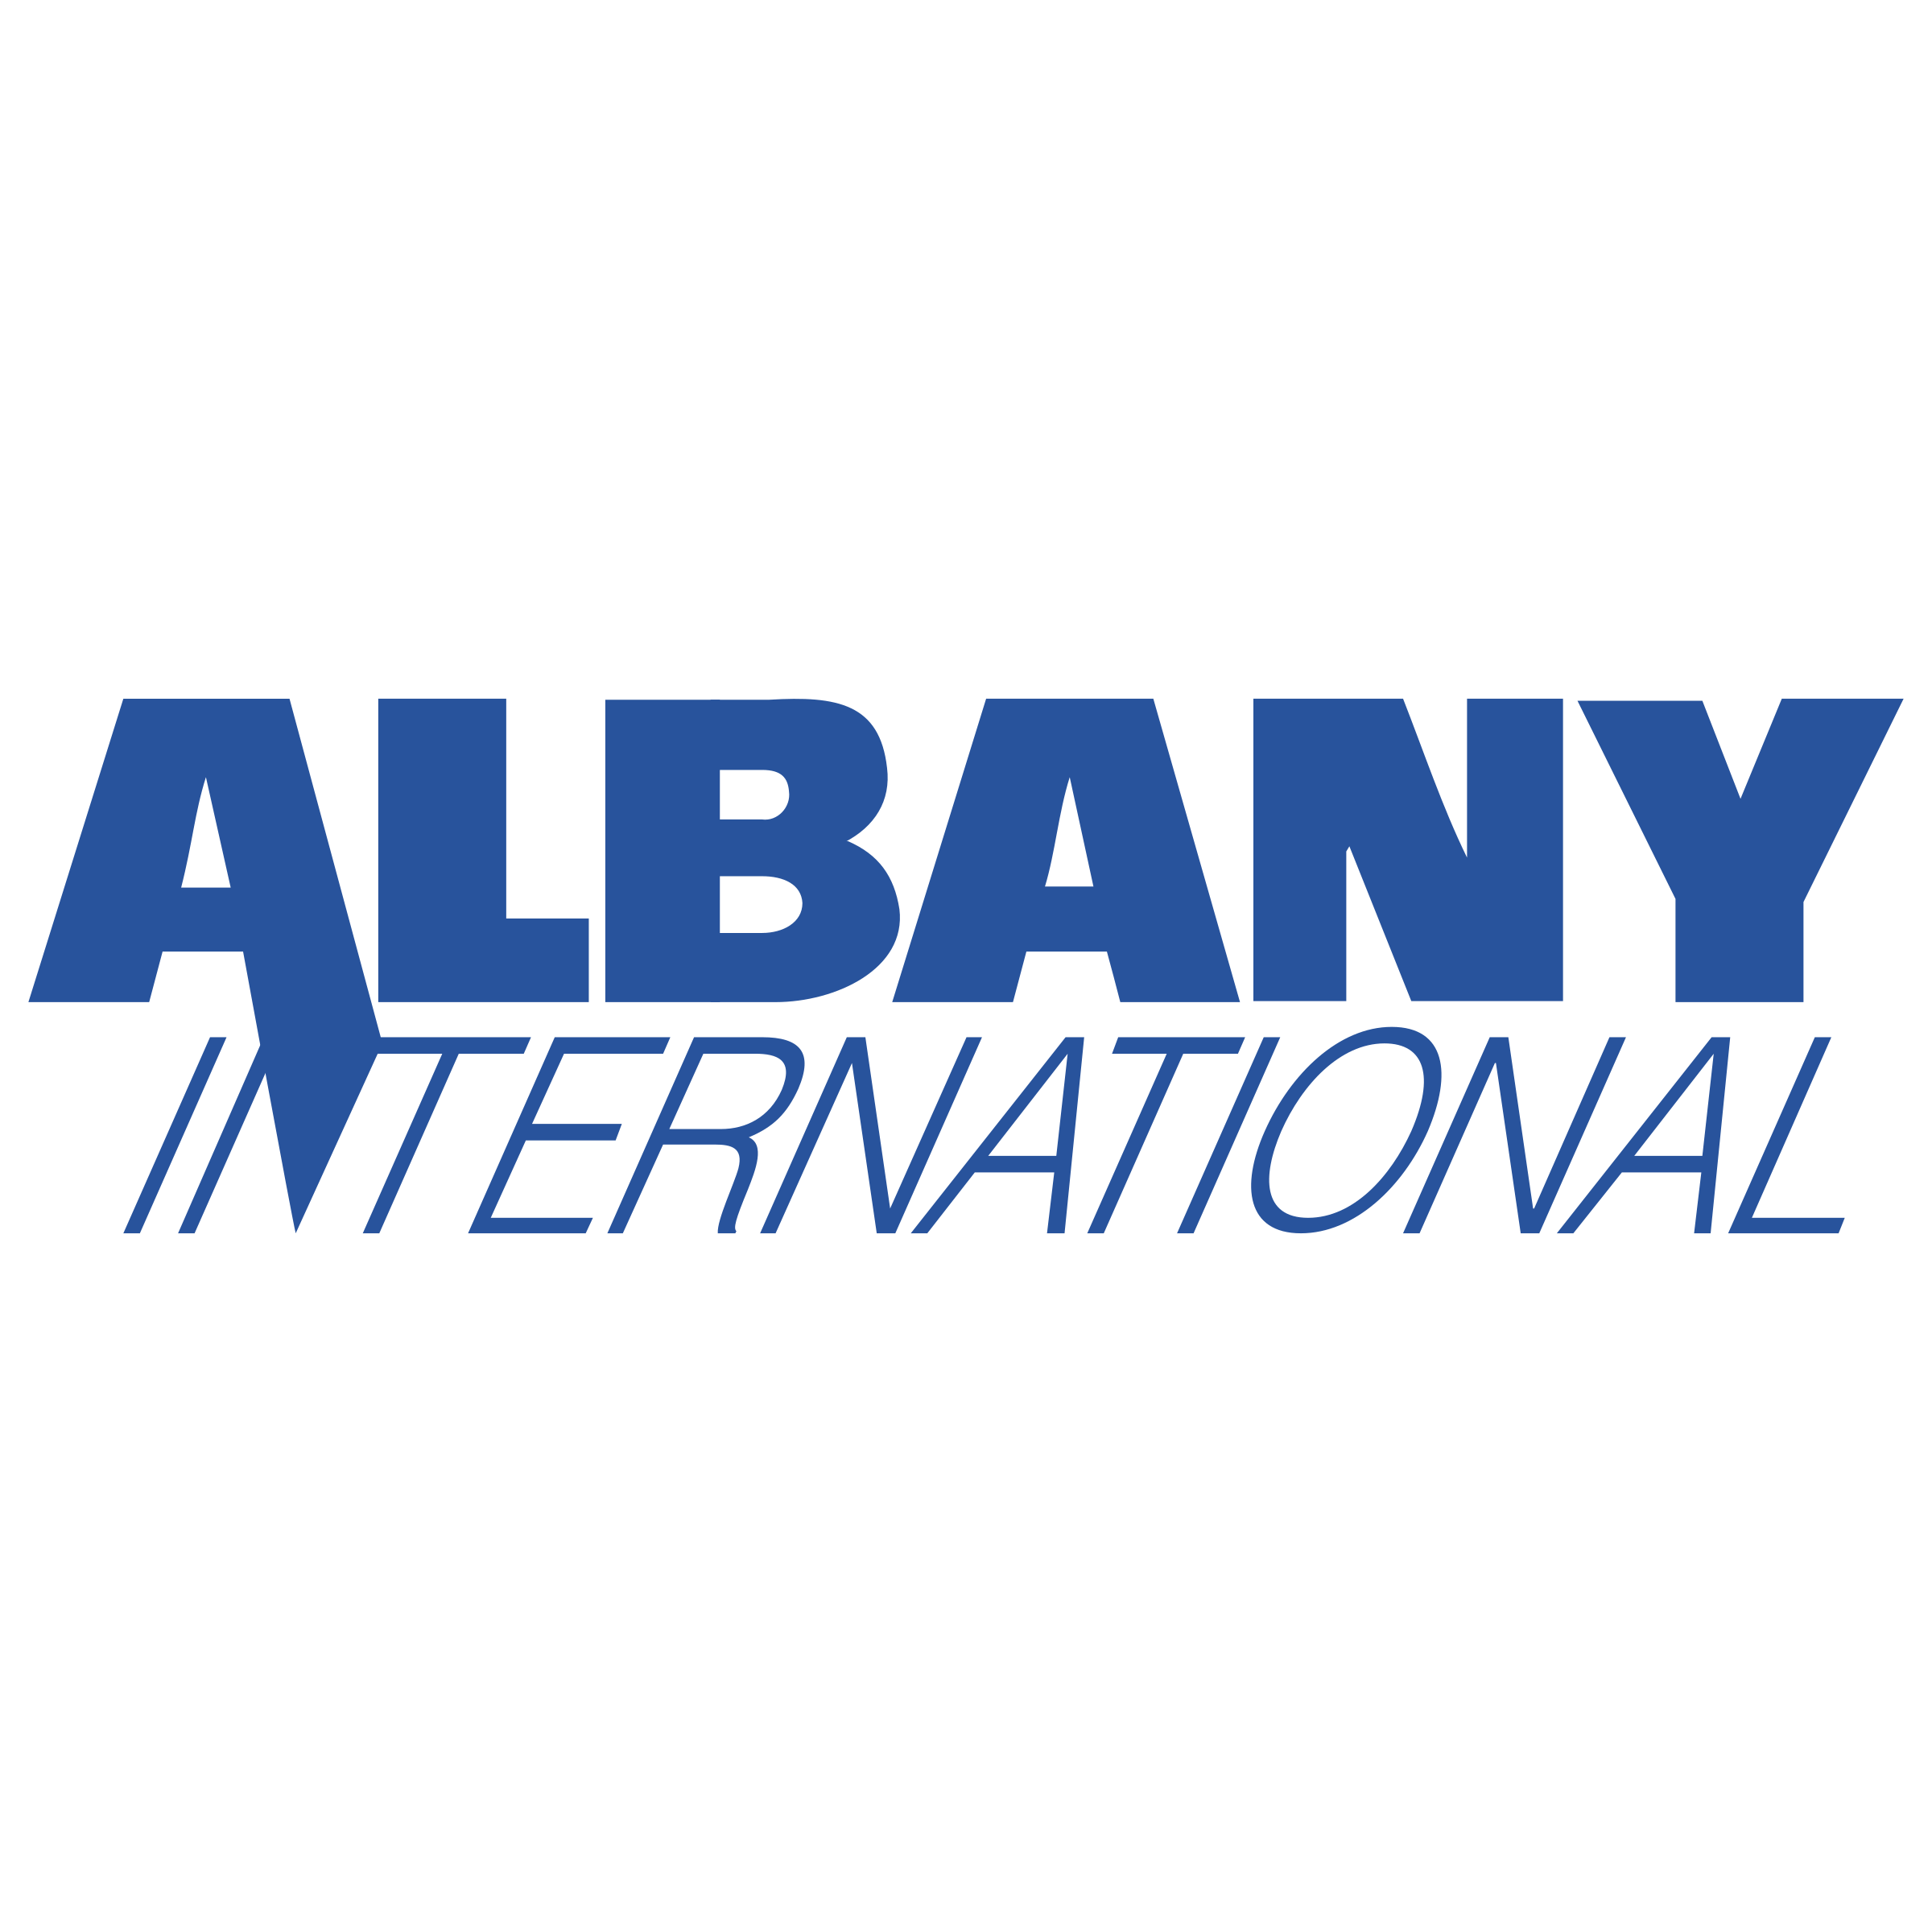 Albany Logo - Albany International Logo PNG Transparent & SVG Vector